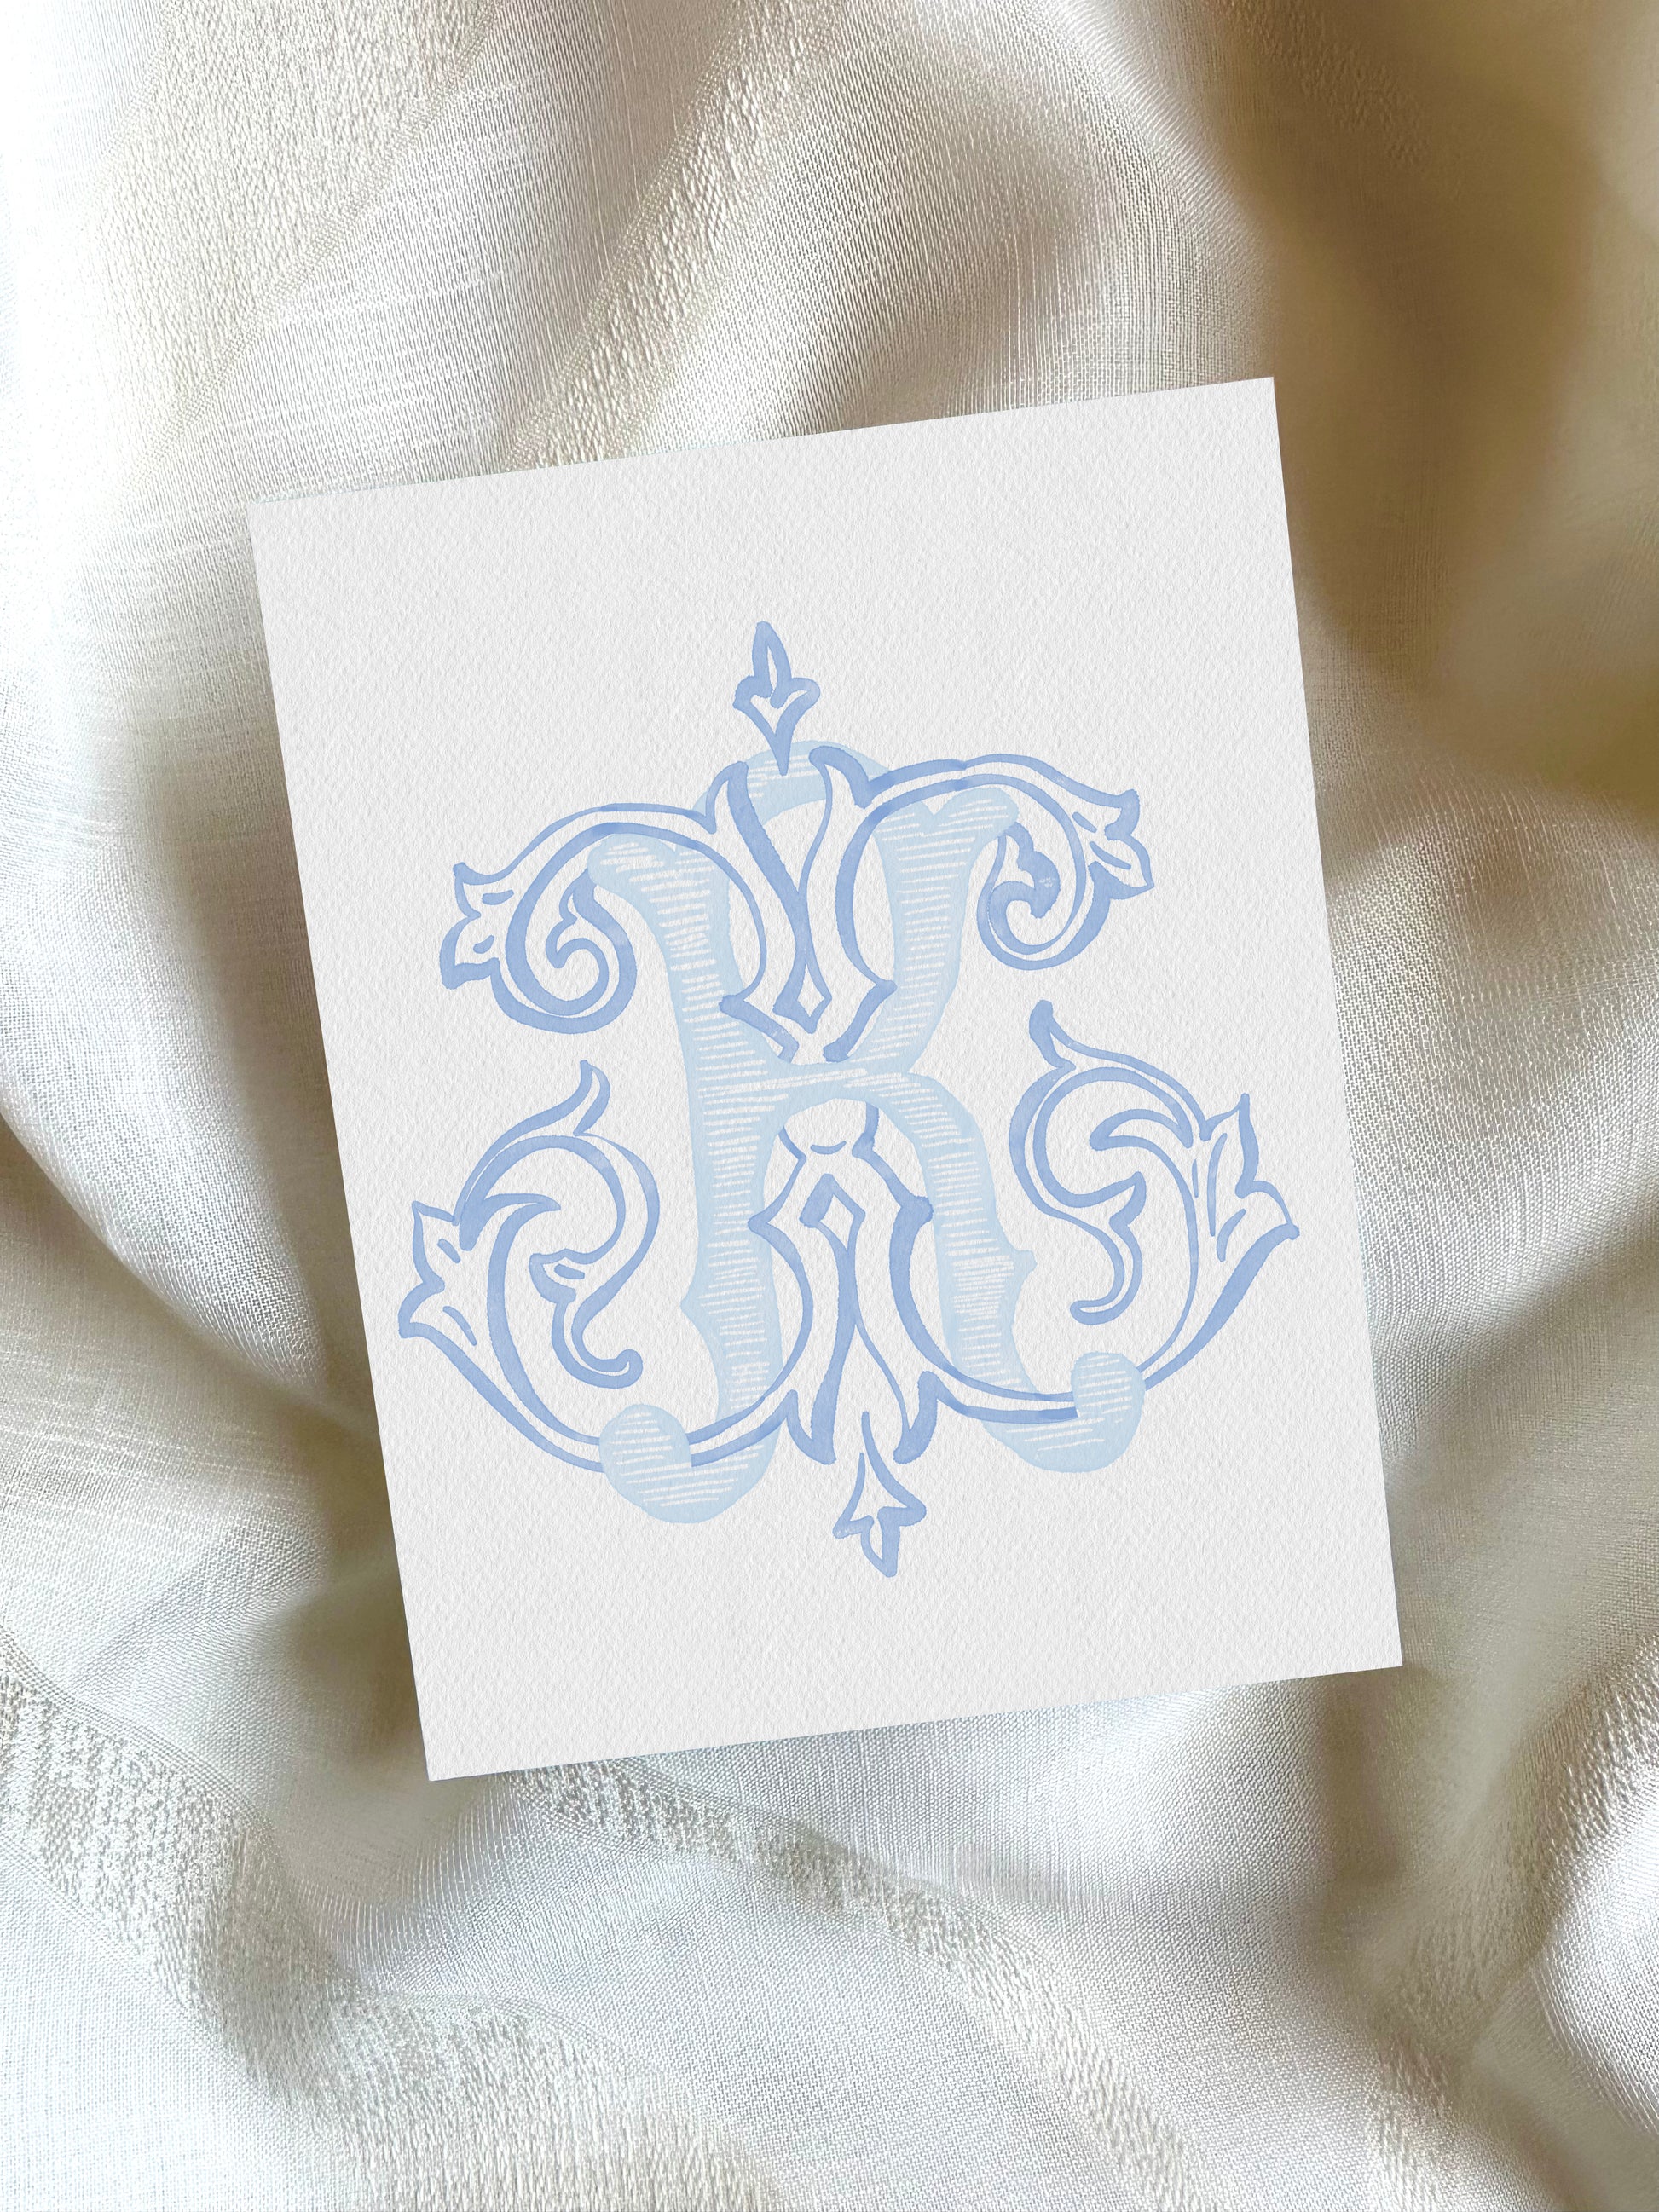 2 Letter Monogram with Letters RX XR | Digital Download - Wedding Monogram SVG, Personal Logo, Wedding Logo for Wedding Invitations The Wedding Crest Lab